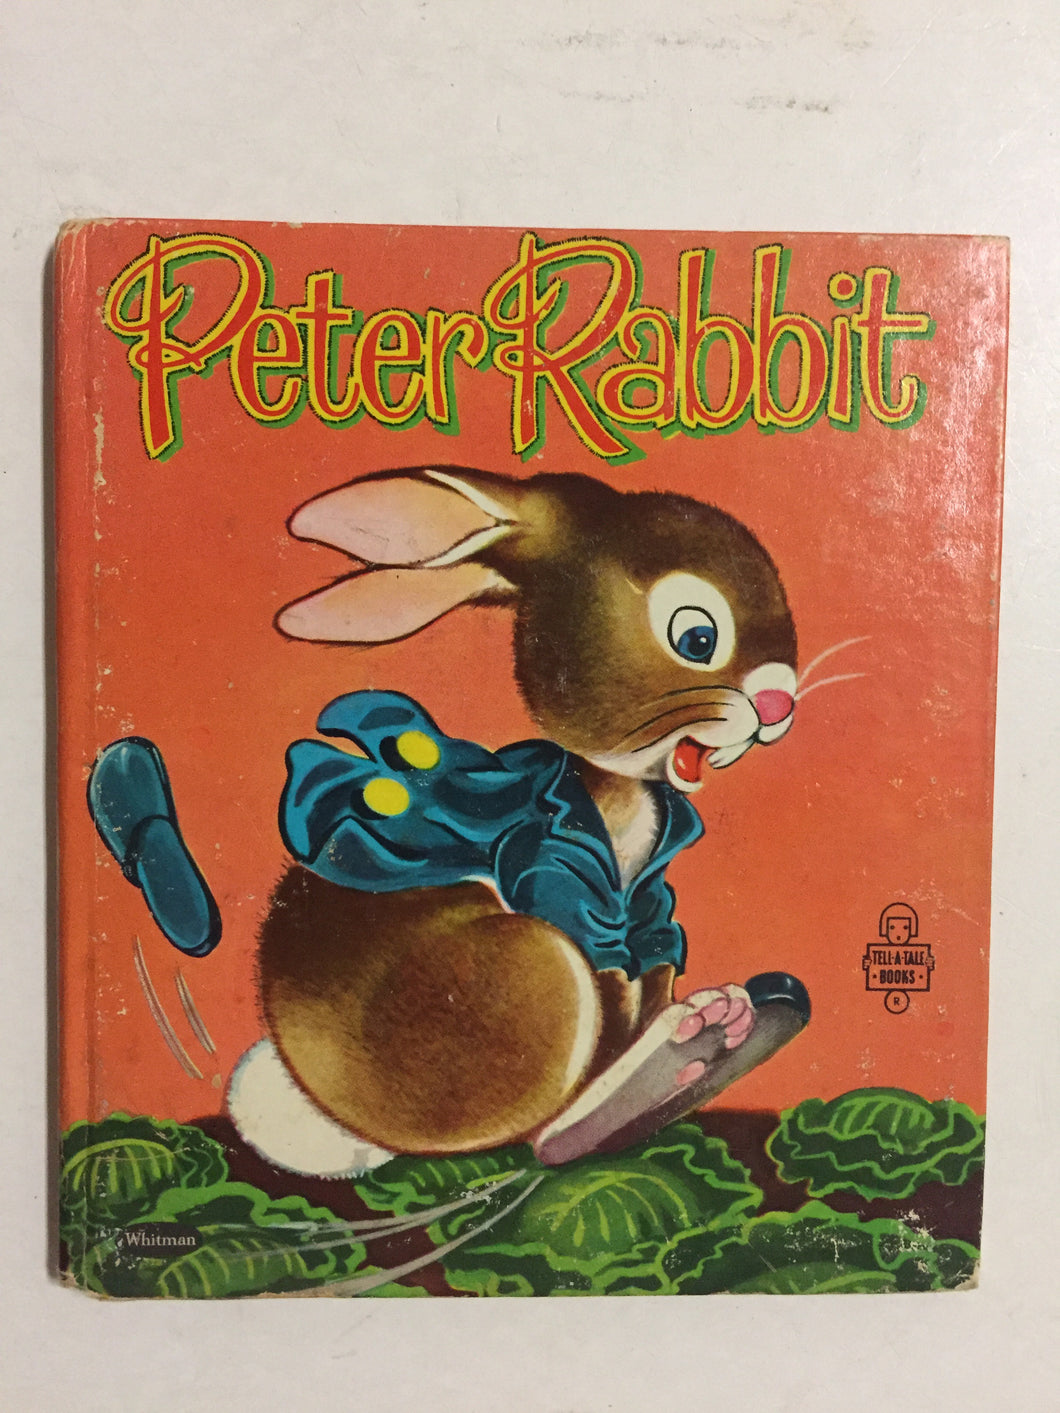 Peter Rabbit - Slick Cat Books 